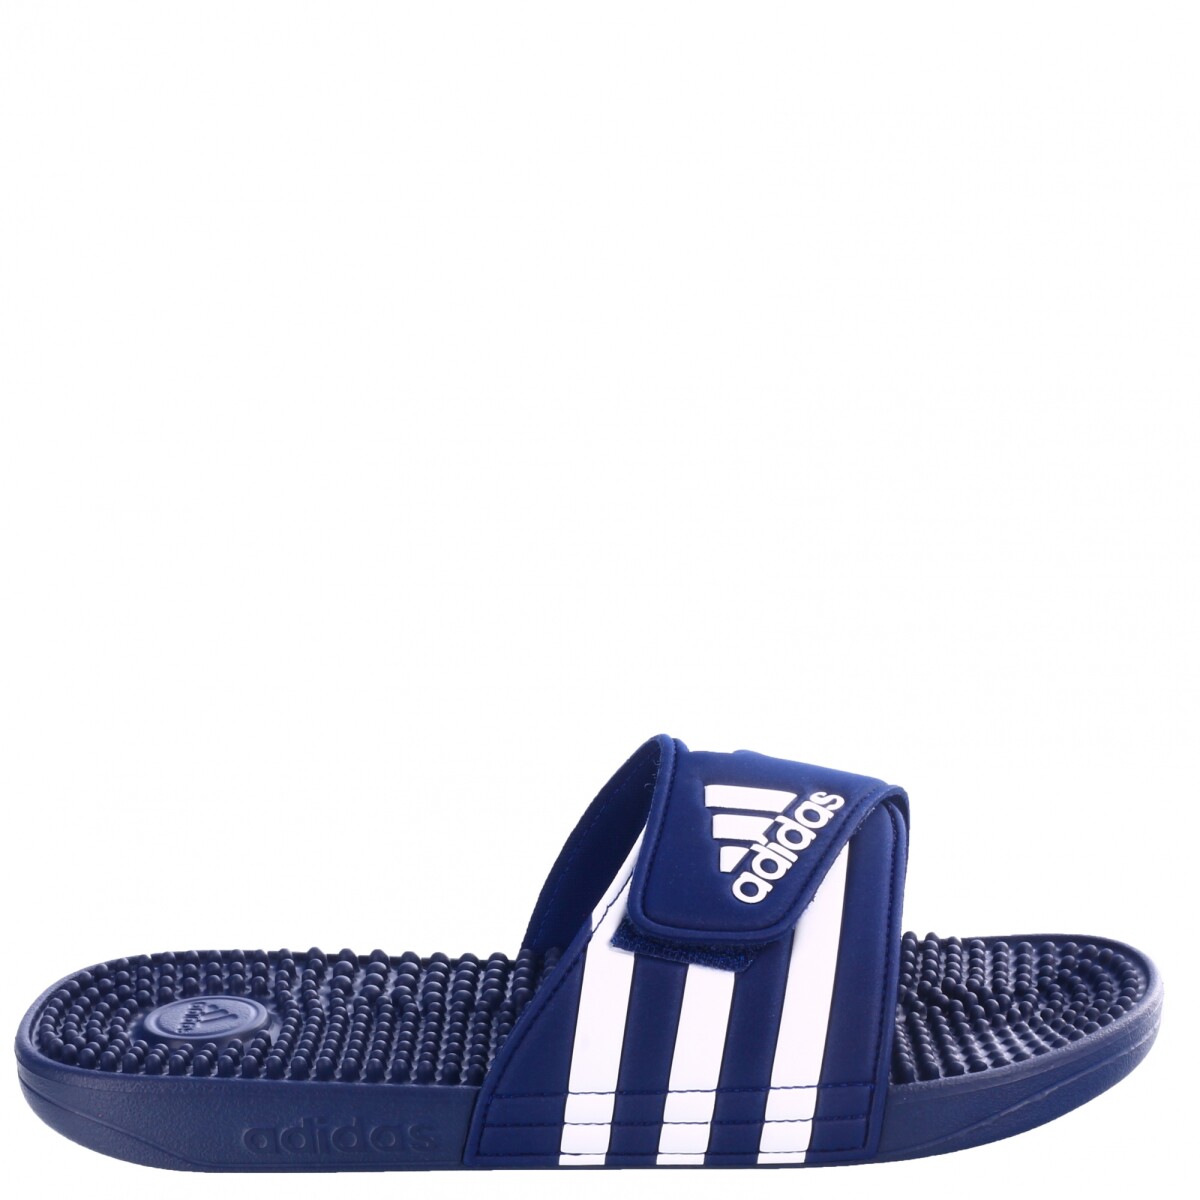 Sandalia Adissage Adidas - Marino/Blanco 